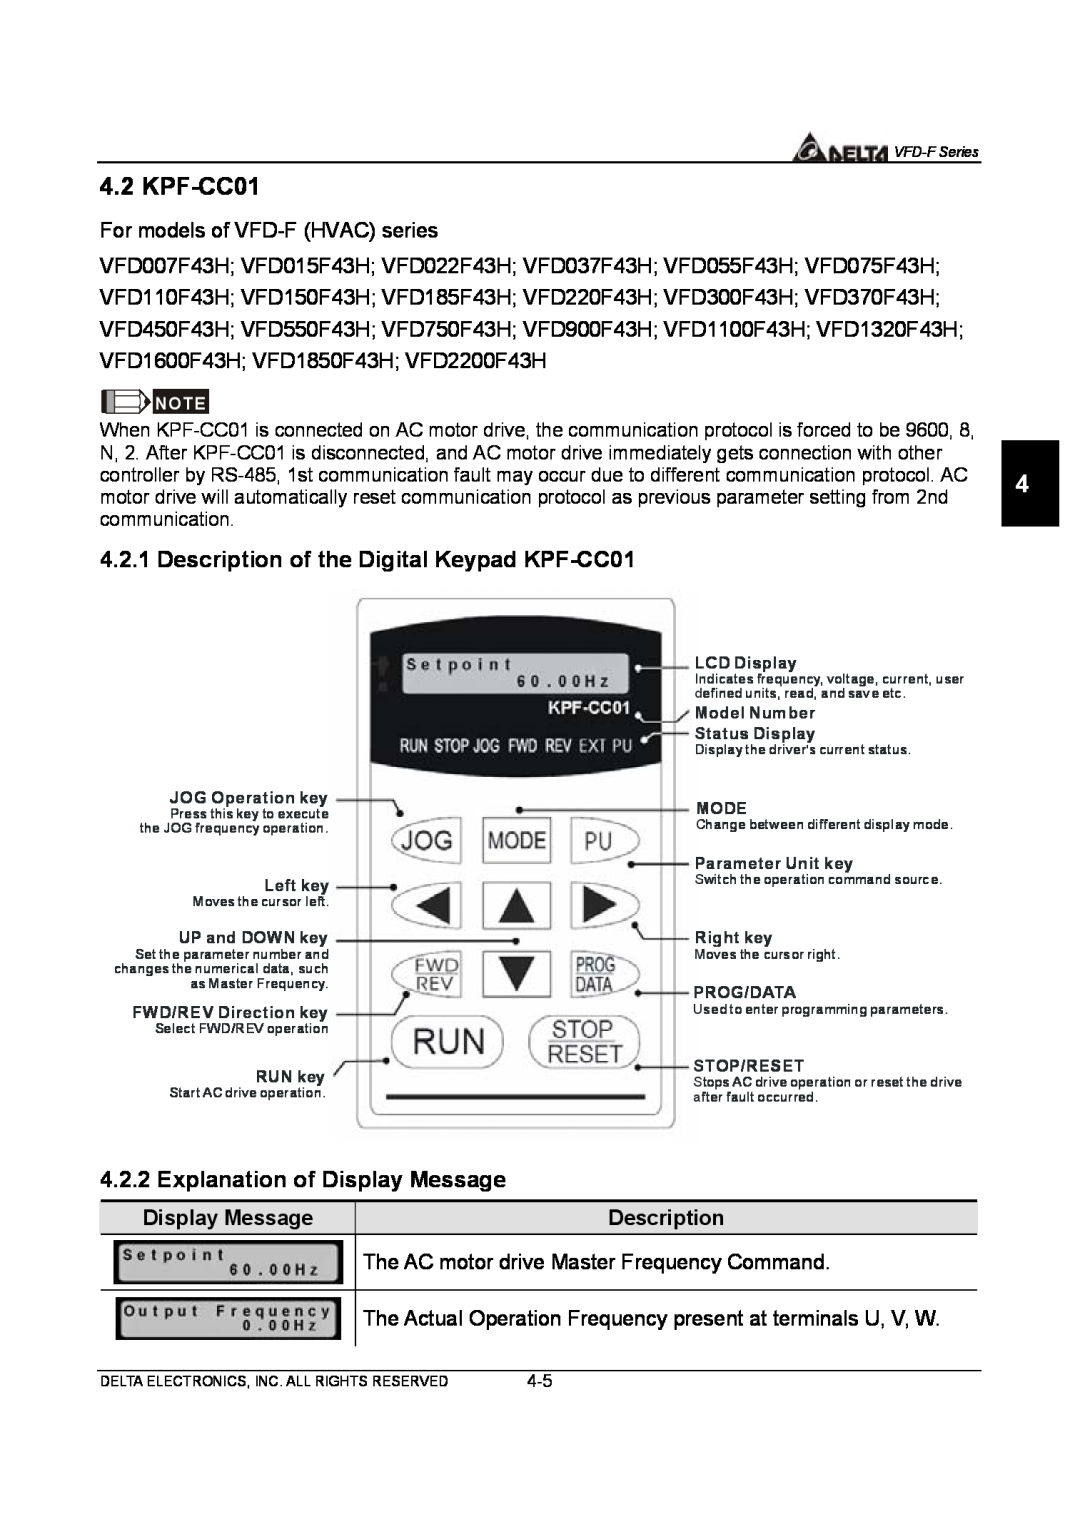 Delta Electronics VFD-F Series manual Description of the Digital Keypad KPF-CC01, Explanation of Display Message 